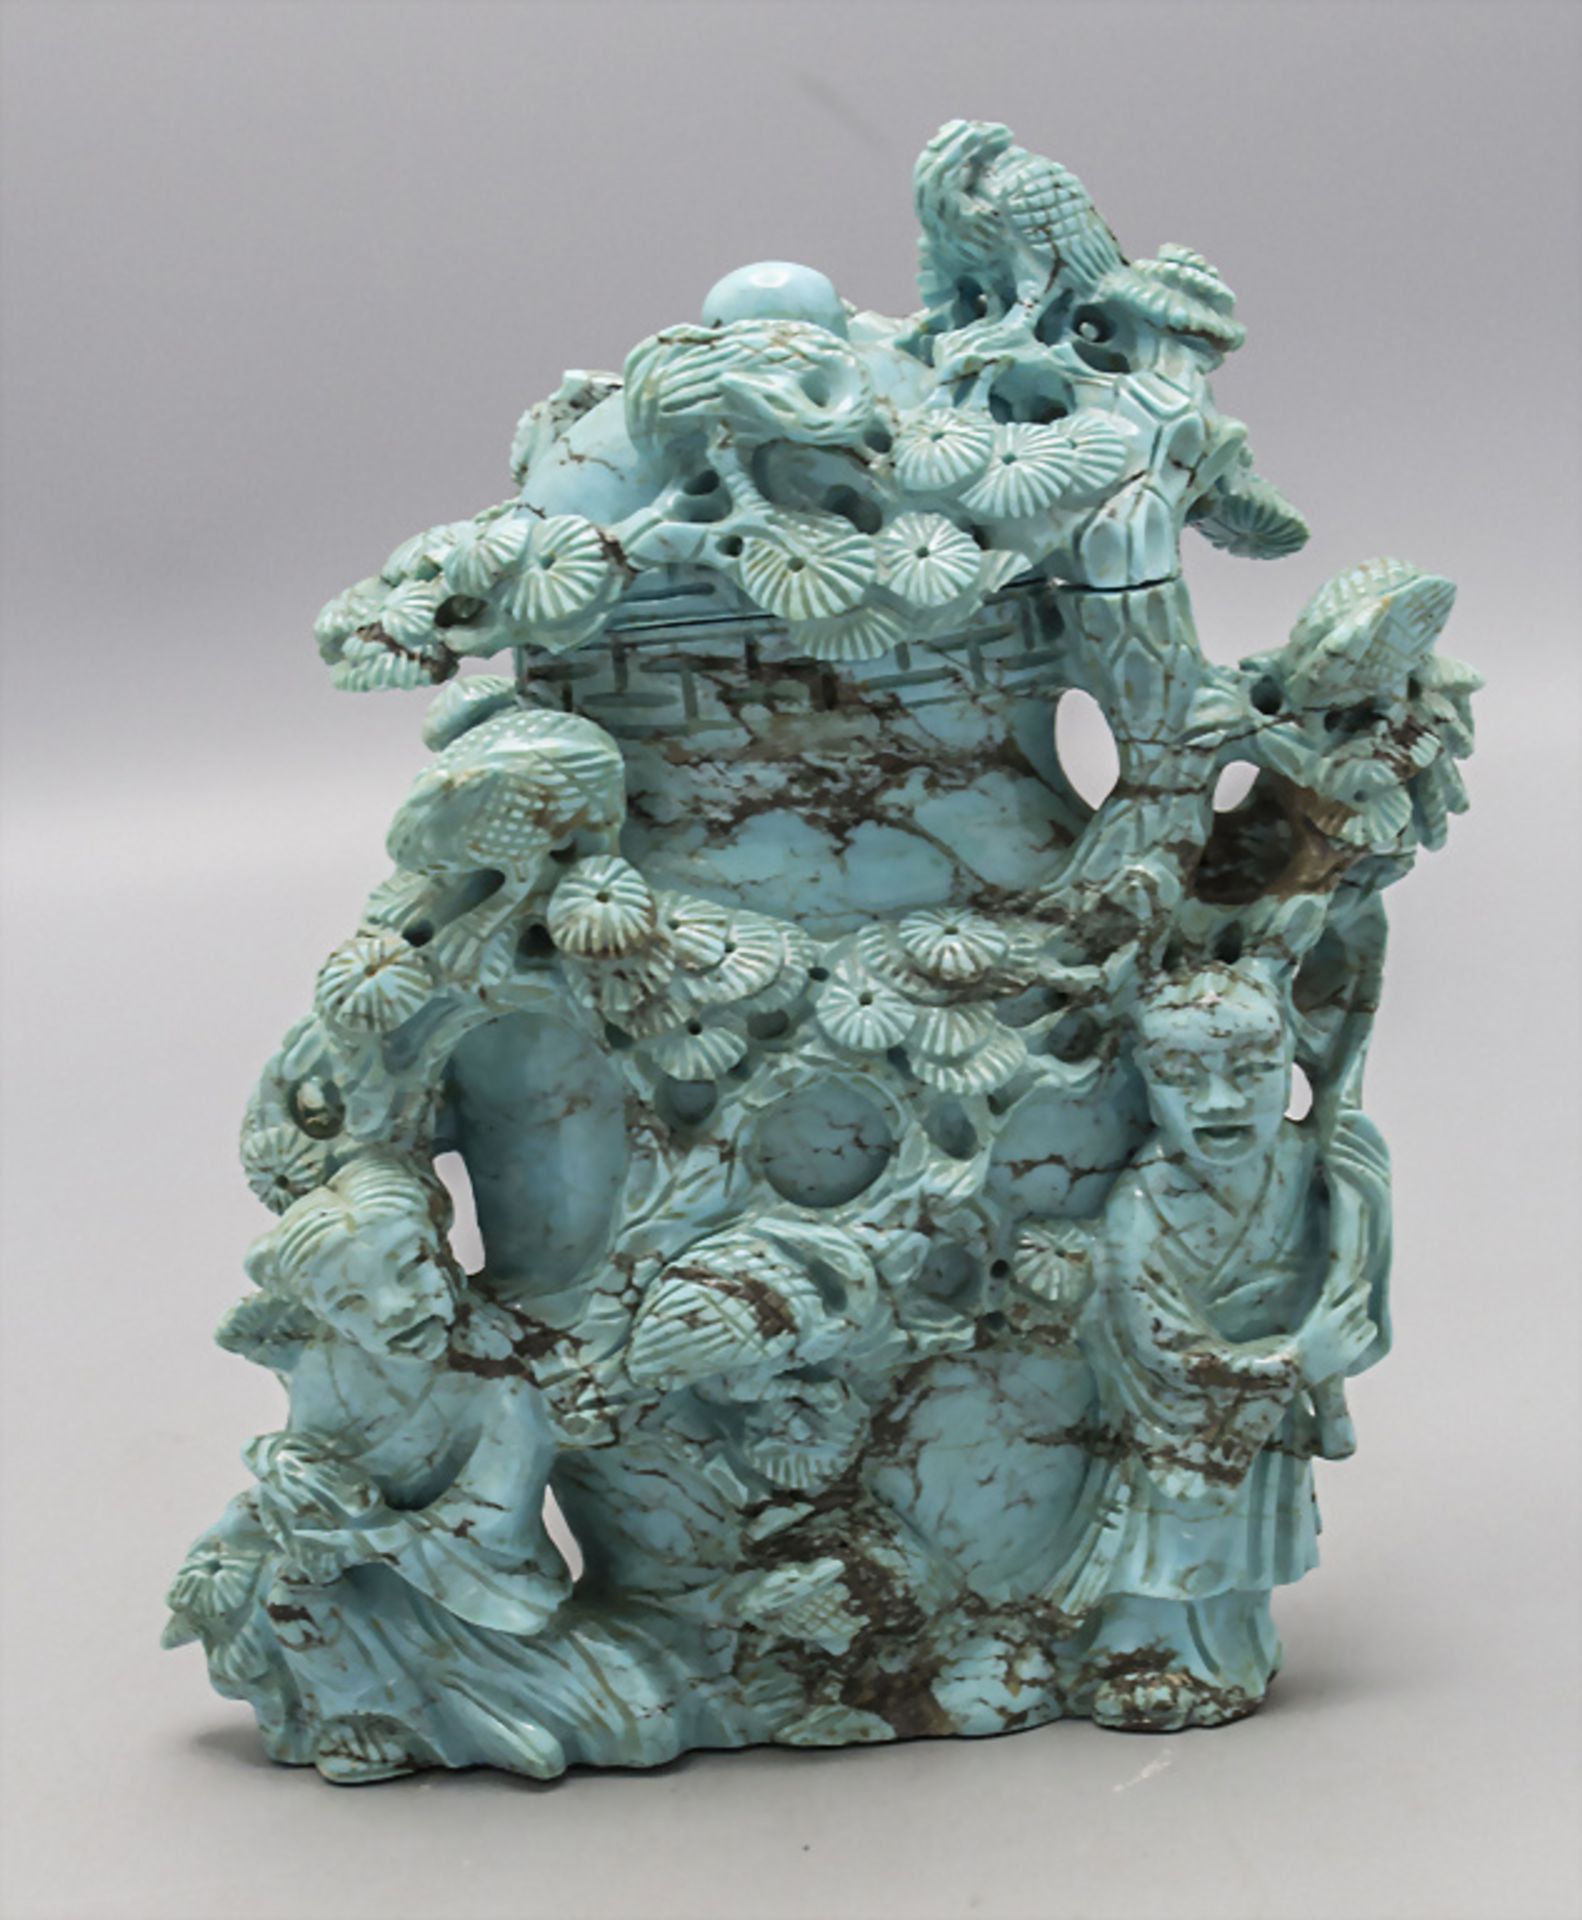 Türkis-Deckelvase / A turquoise lidded vase, China, späte Qing-Dynastie (1644-1911)